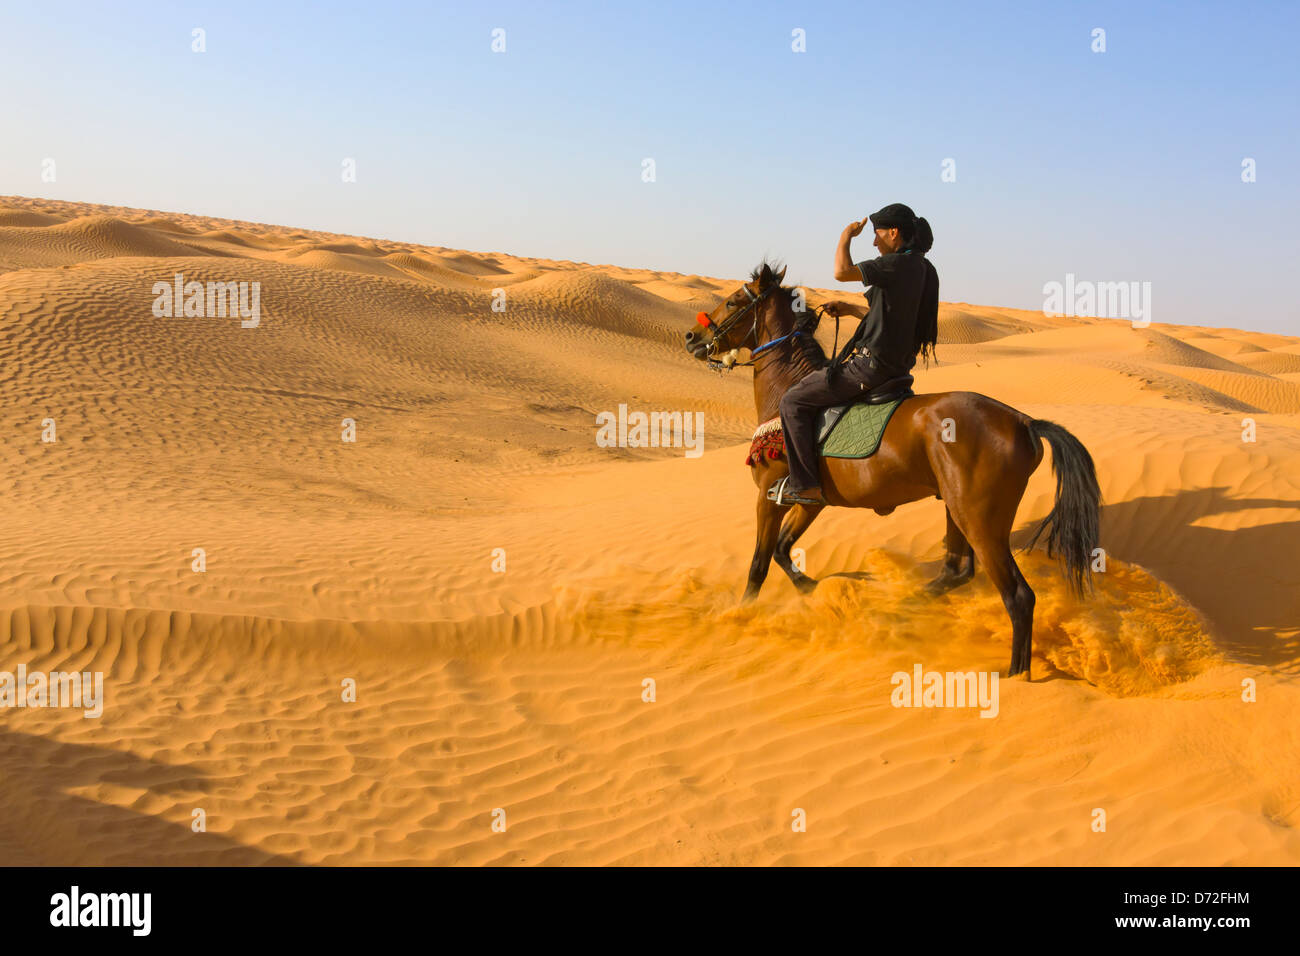 Man riding on horse in Sahara Desert, Ksar Ghilane, Tunisia Stock Photo